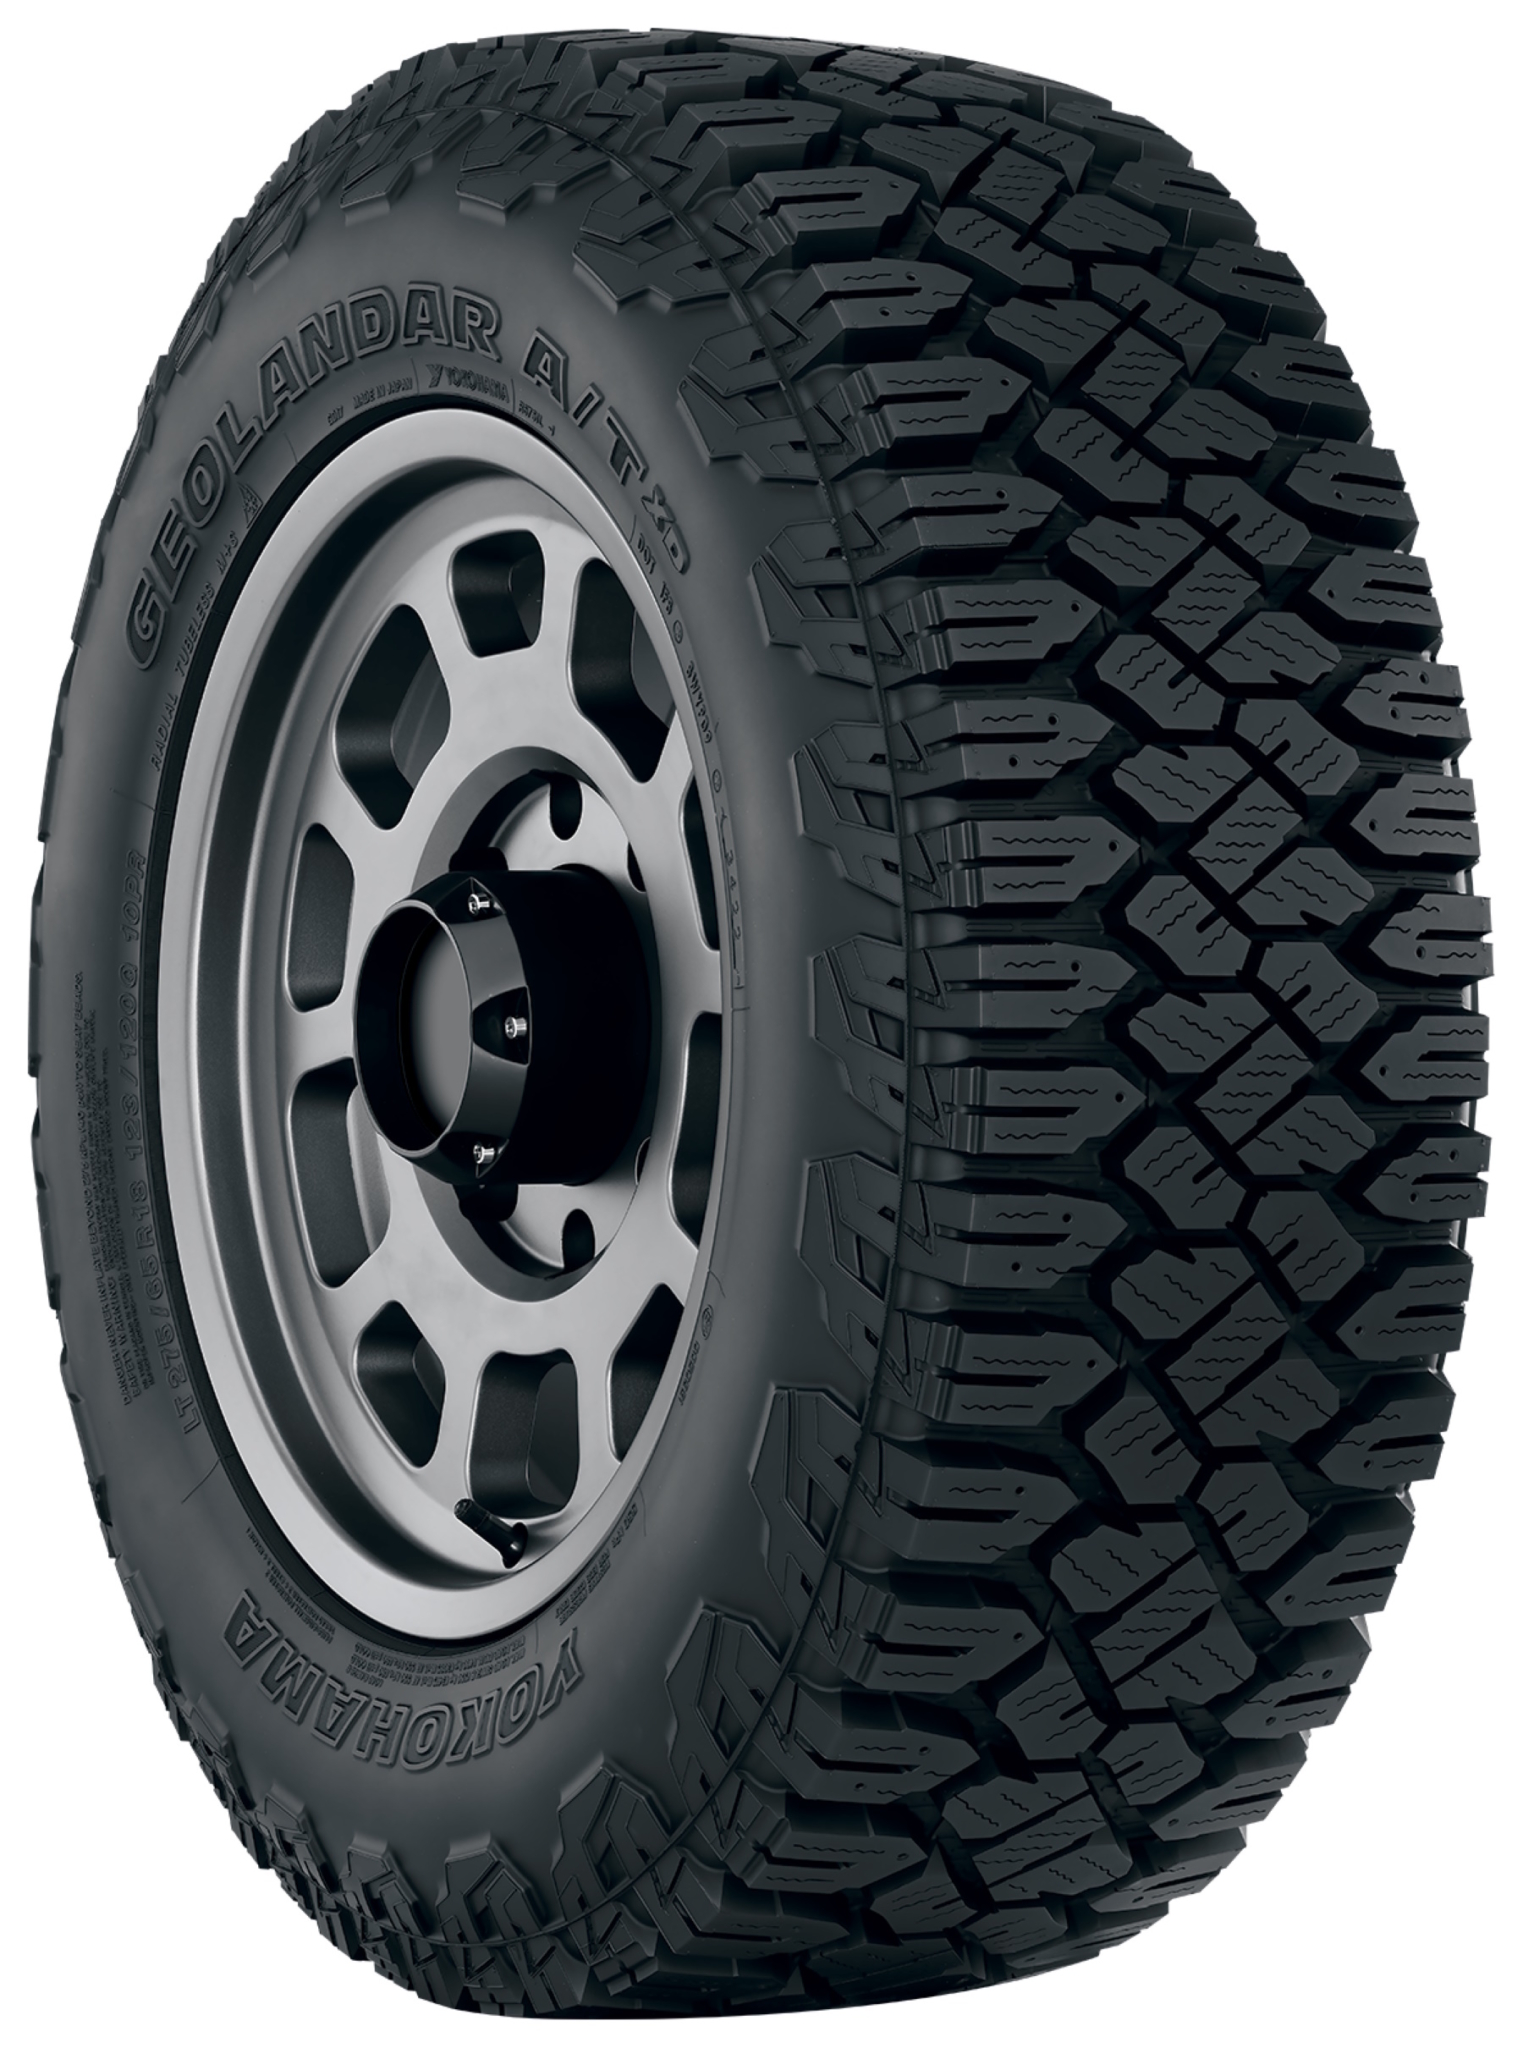 Yokohama USA launches Geolandar A/T XD pickup truck tyre